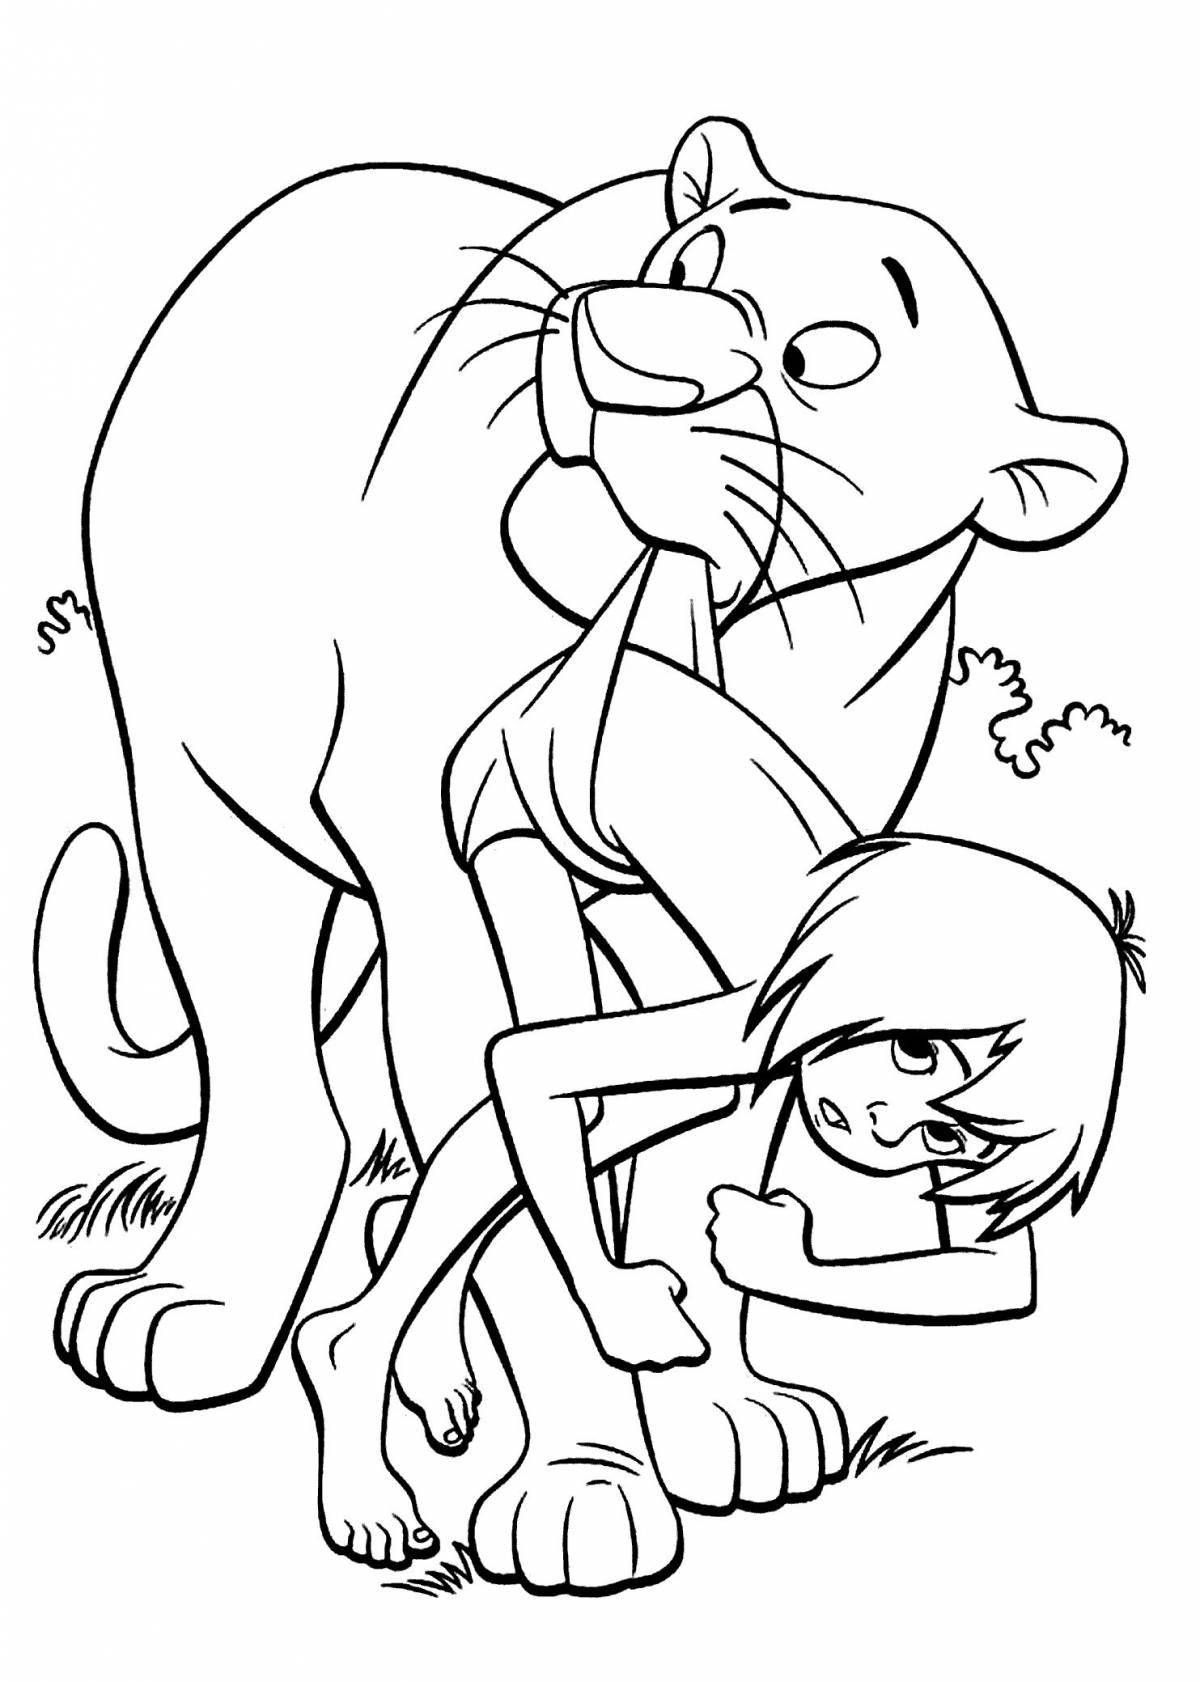 Mowgli humorous coloring book